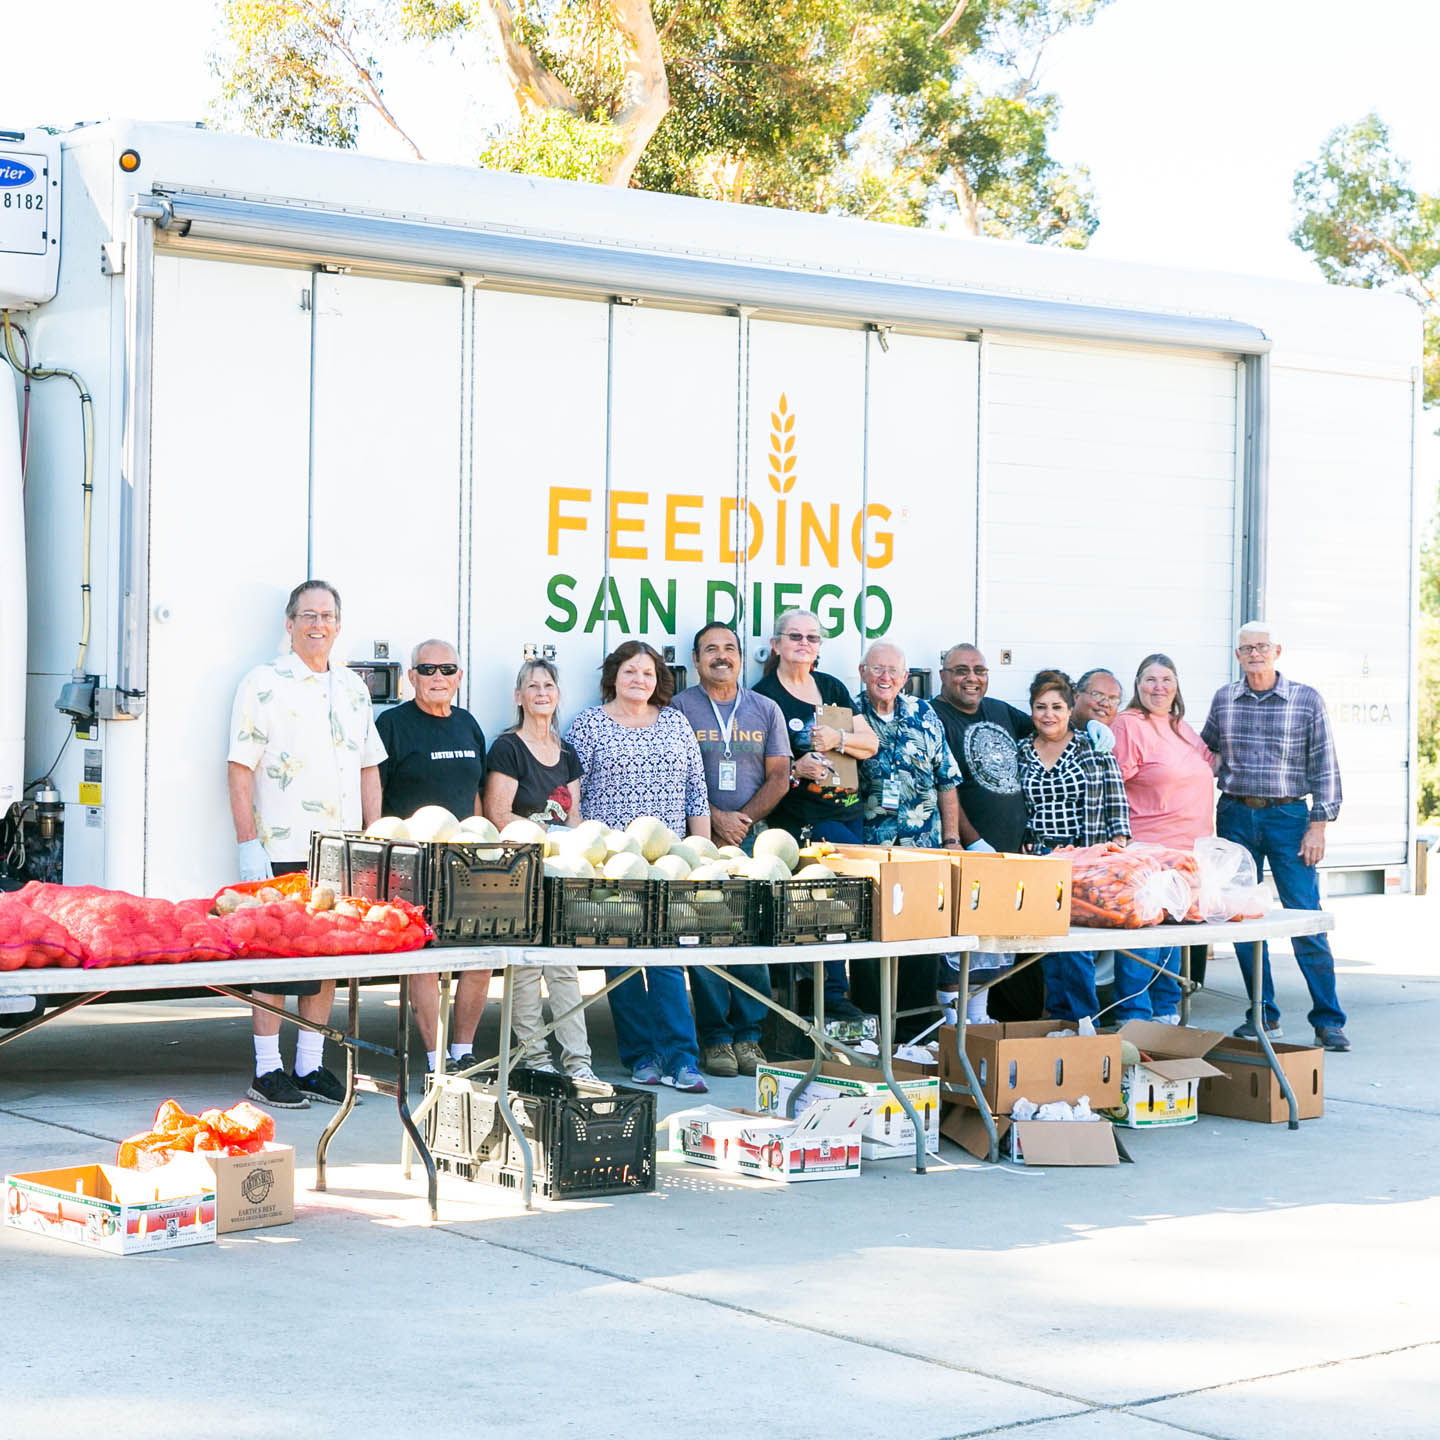 Feeding San Diego volunteers behind a tables filled with food